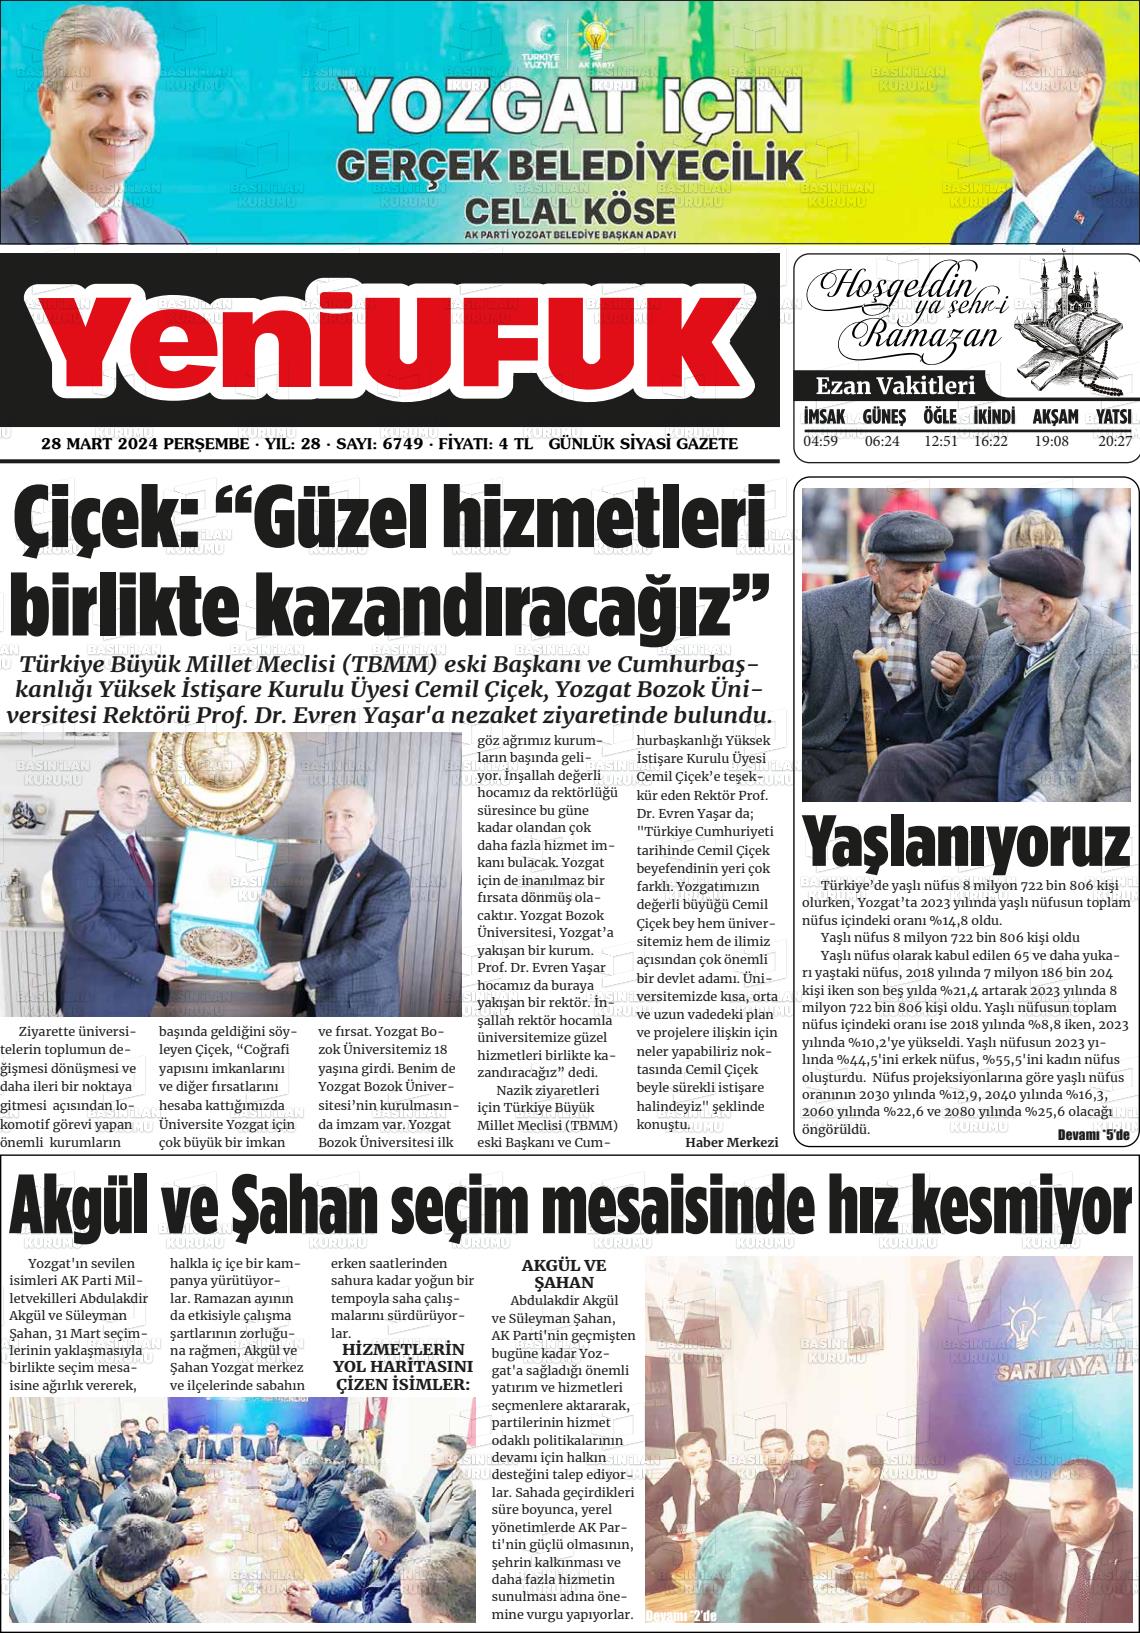 28 Mart 2024 Yozgat Yeni Ufuk Gazete Manşeti